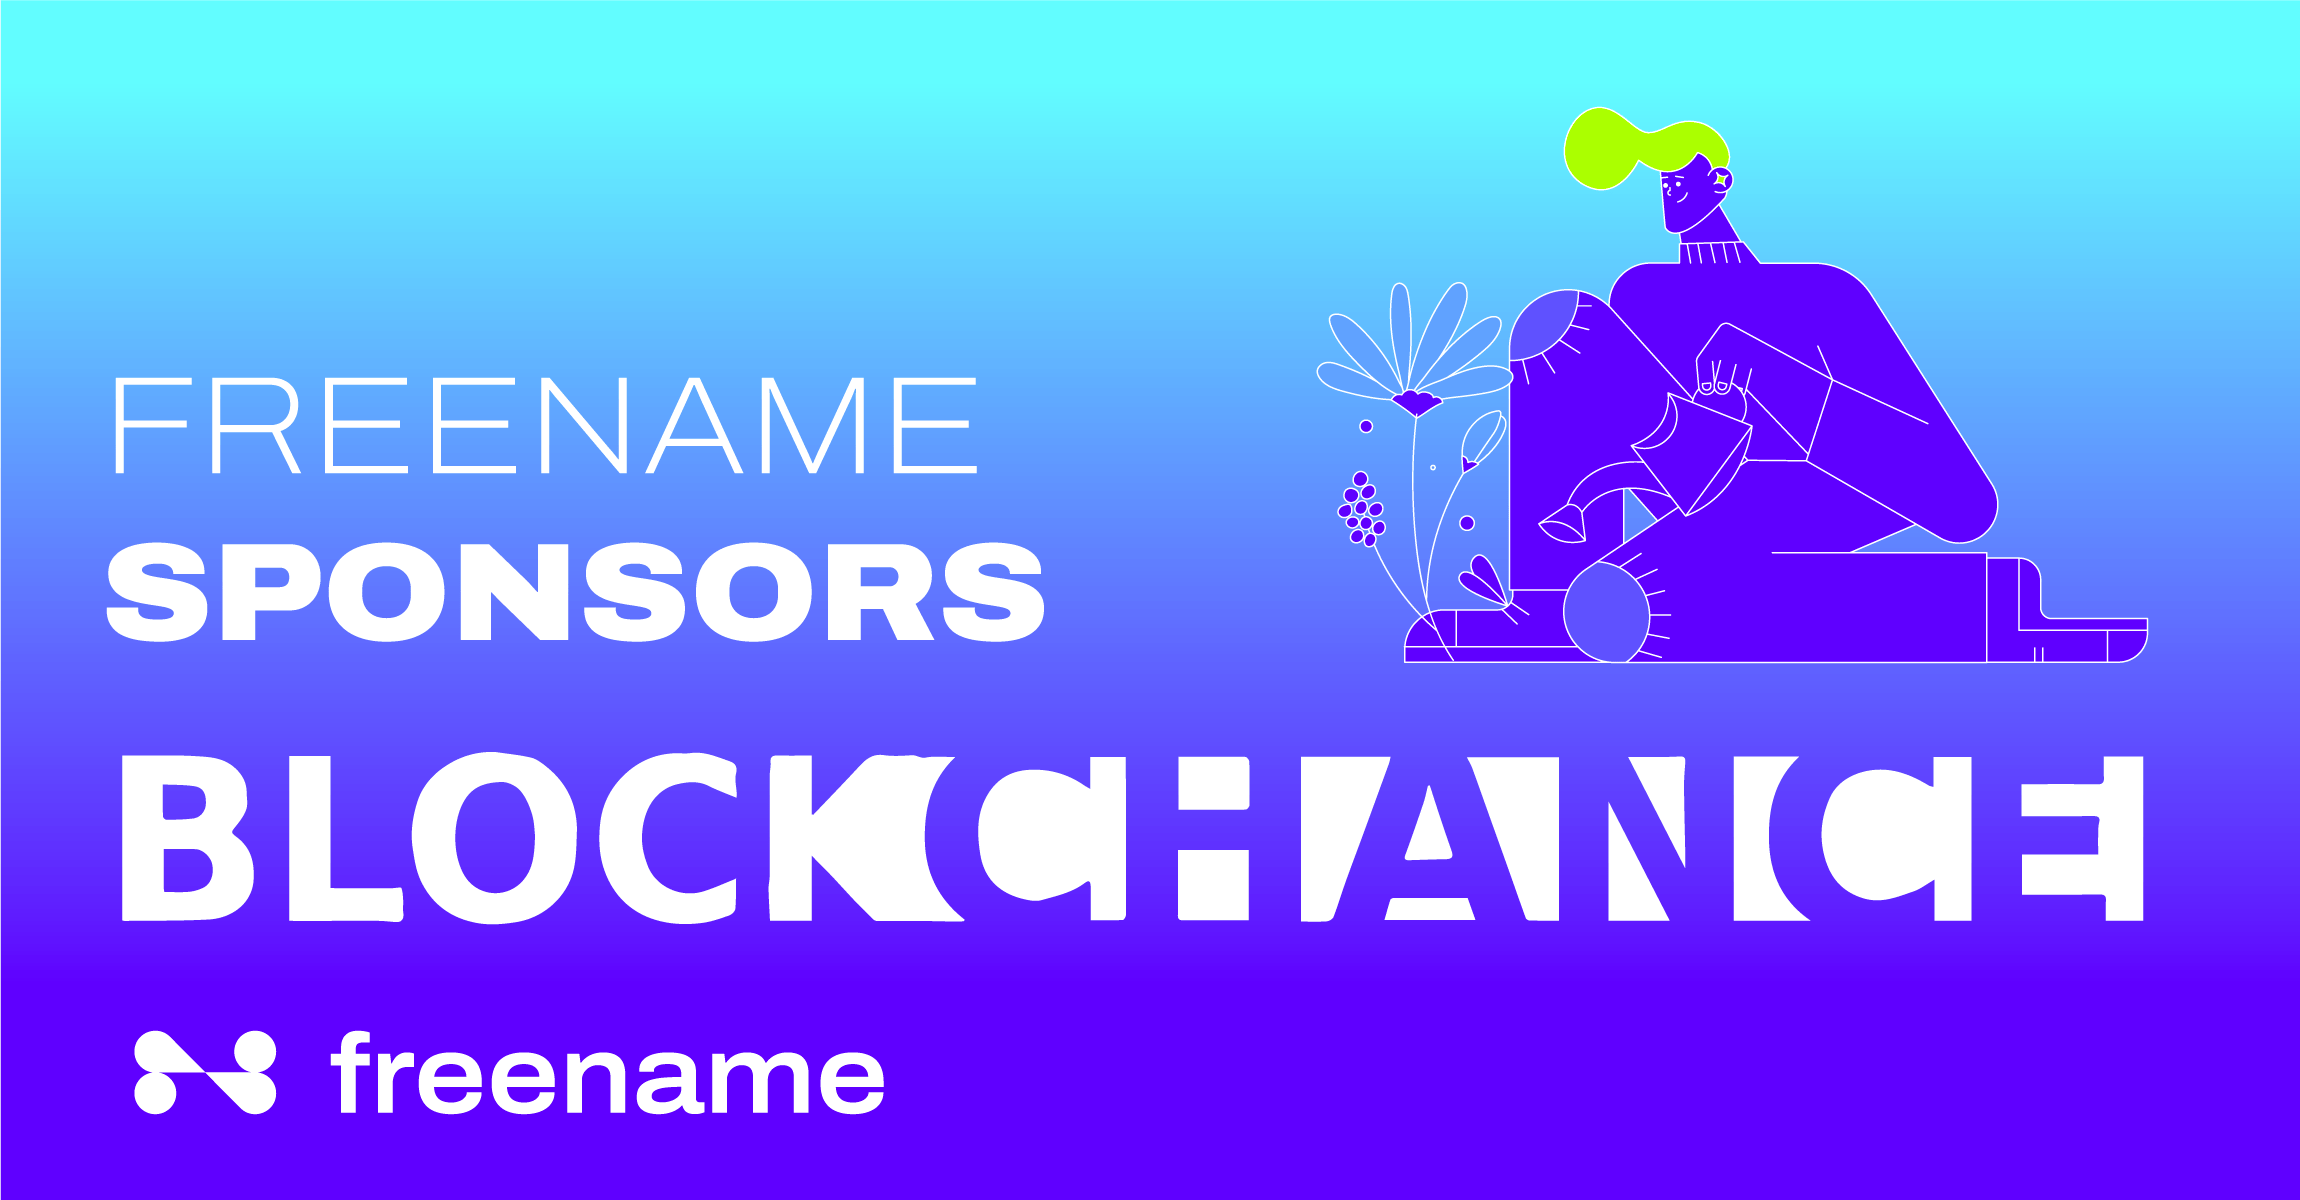 Freename sponsors Blockchance